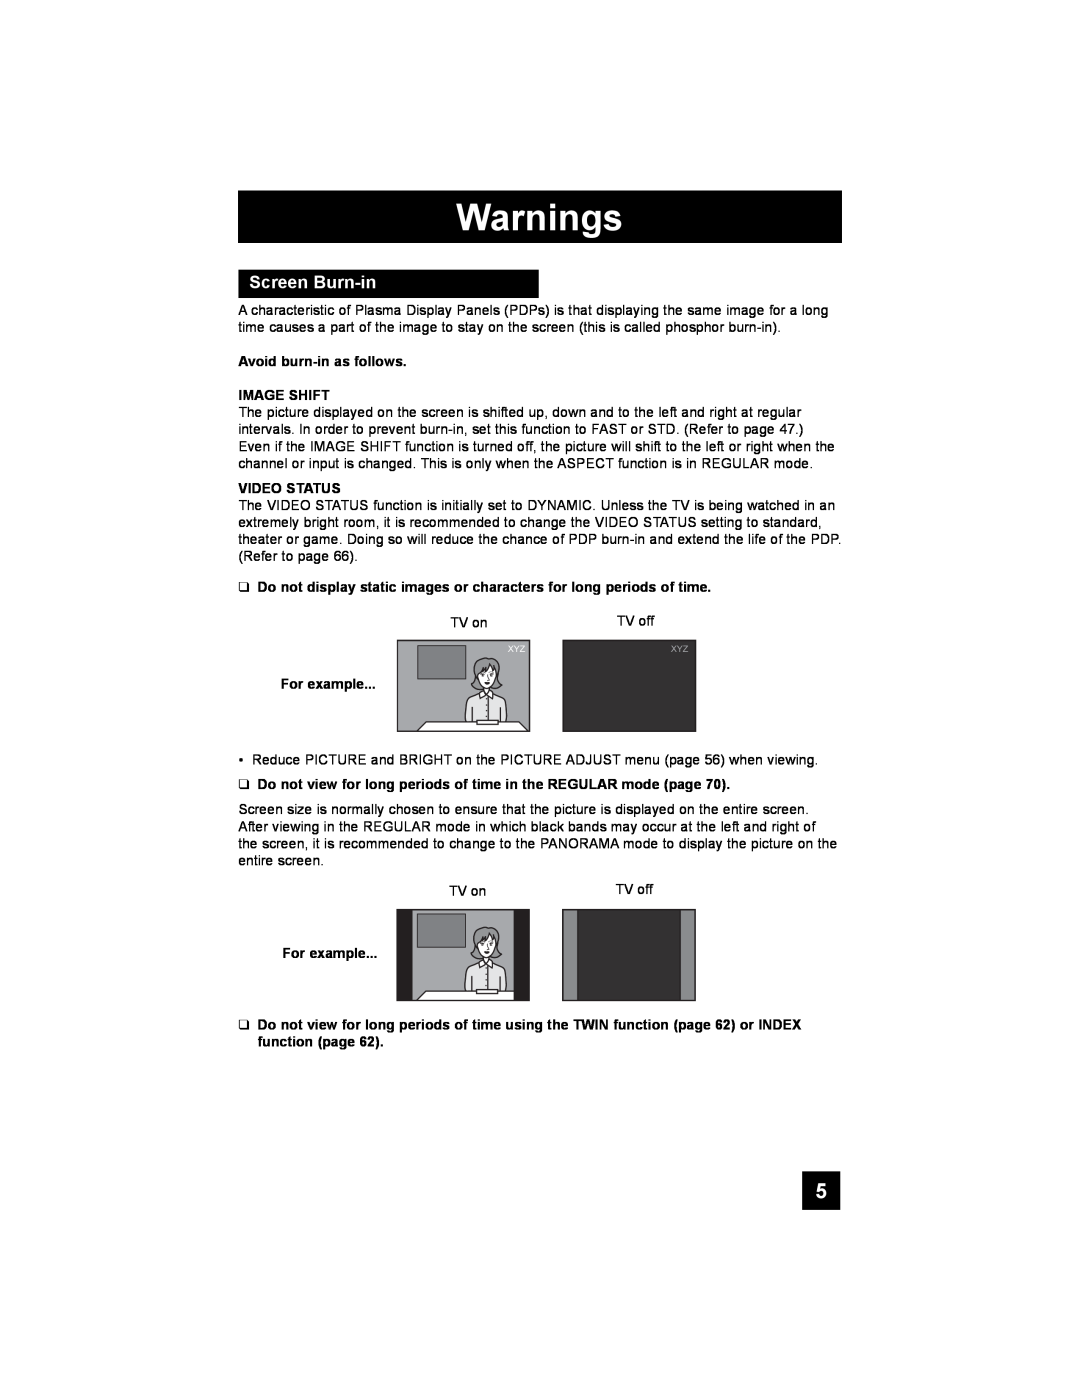 JVC PD-42X776 manual Warnings, Screen Burn-in, Avoid burn-in as follows IMAGE SHIFT, Video Status, For example 